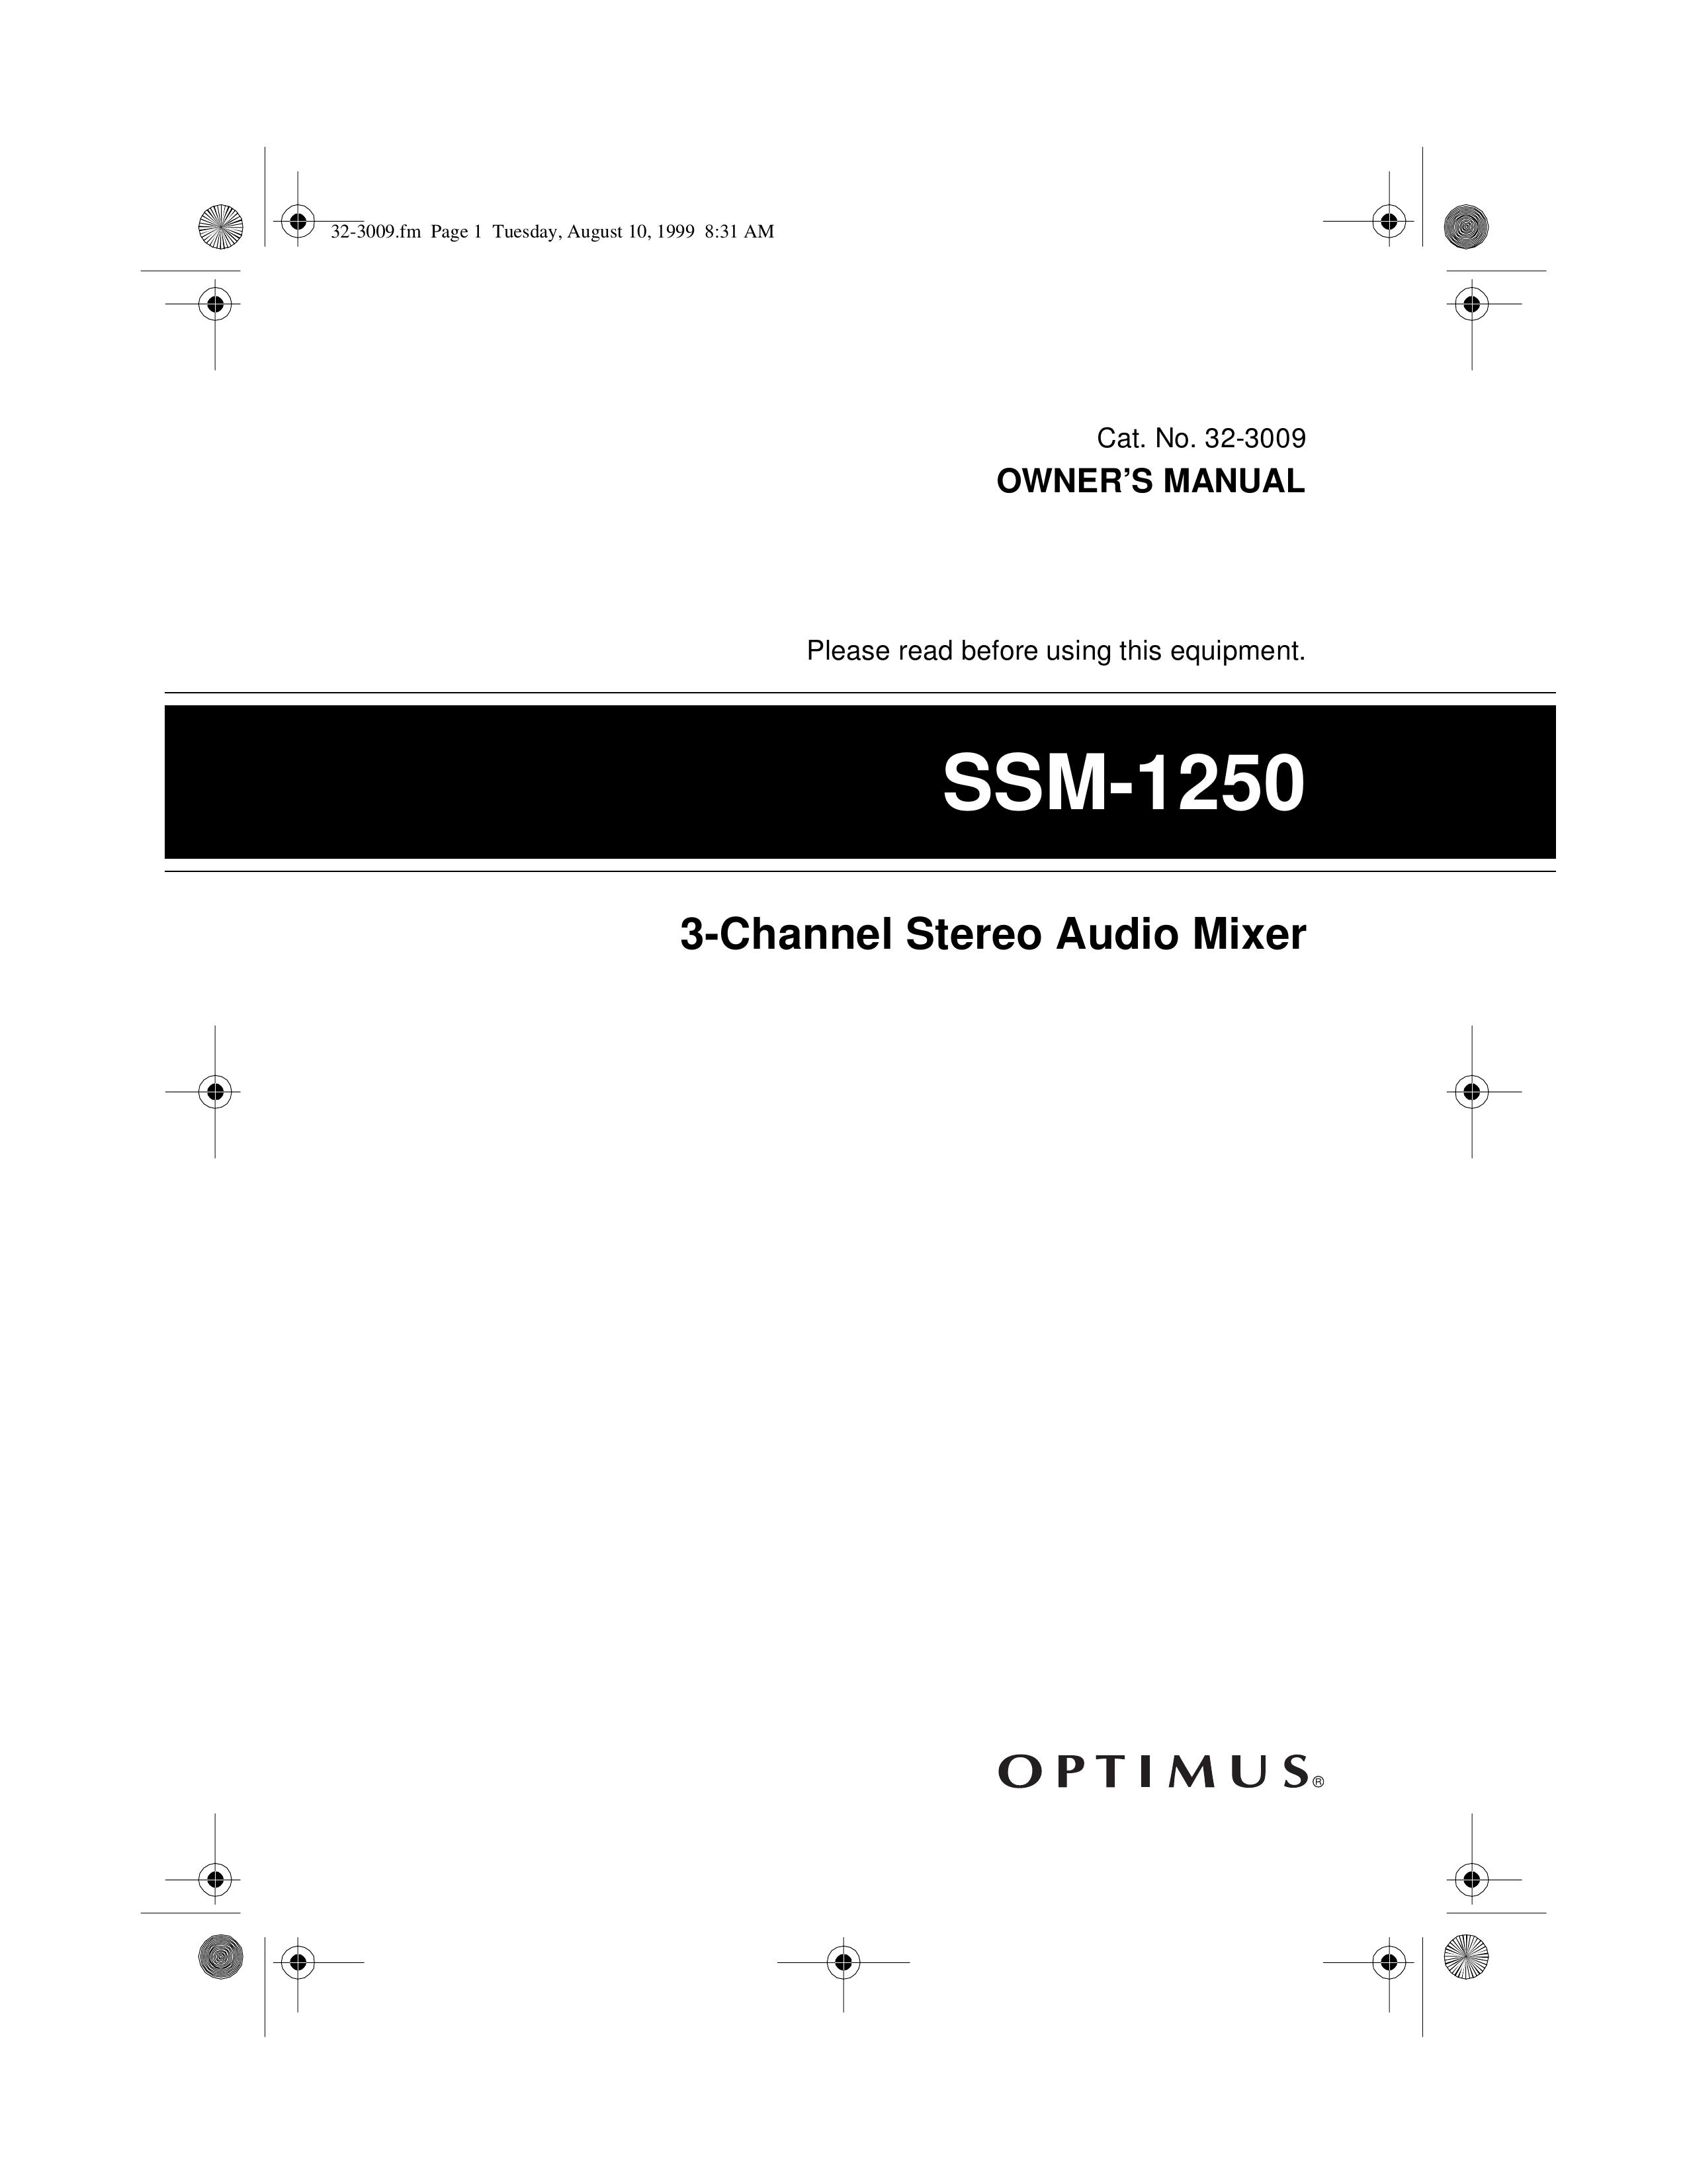 Optimus 32-3009 Music Mixer User Manual